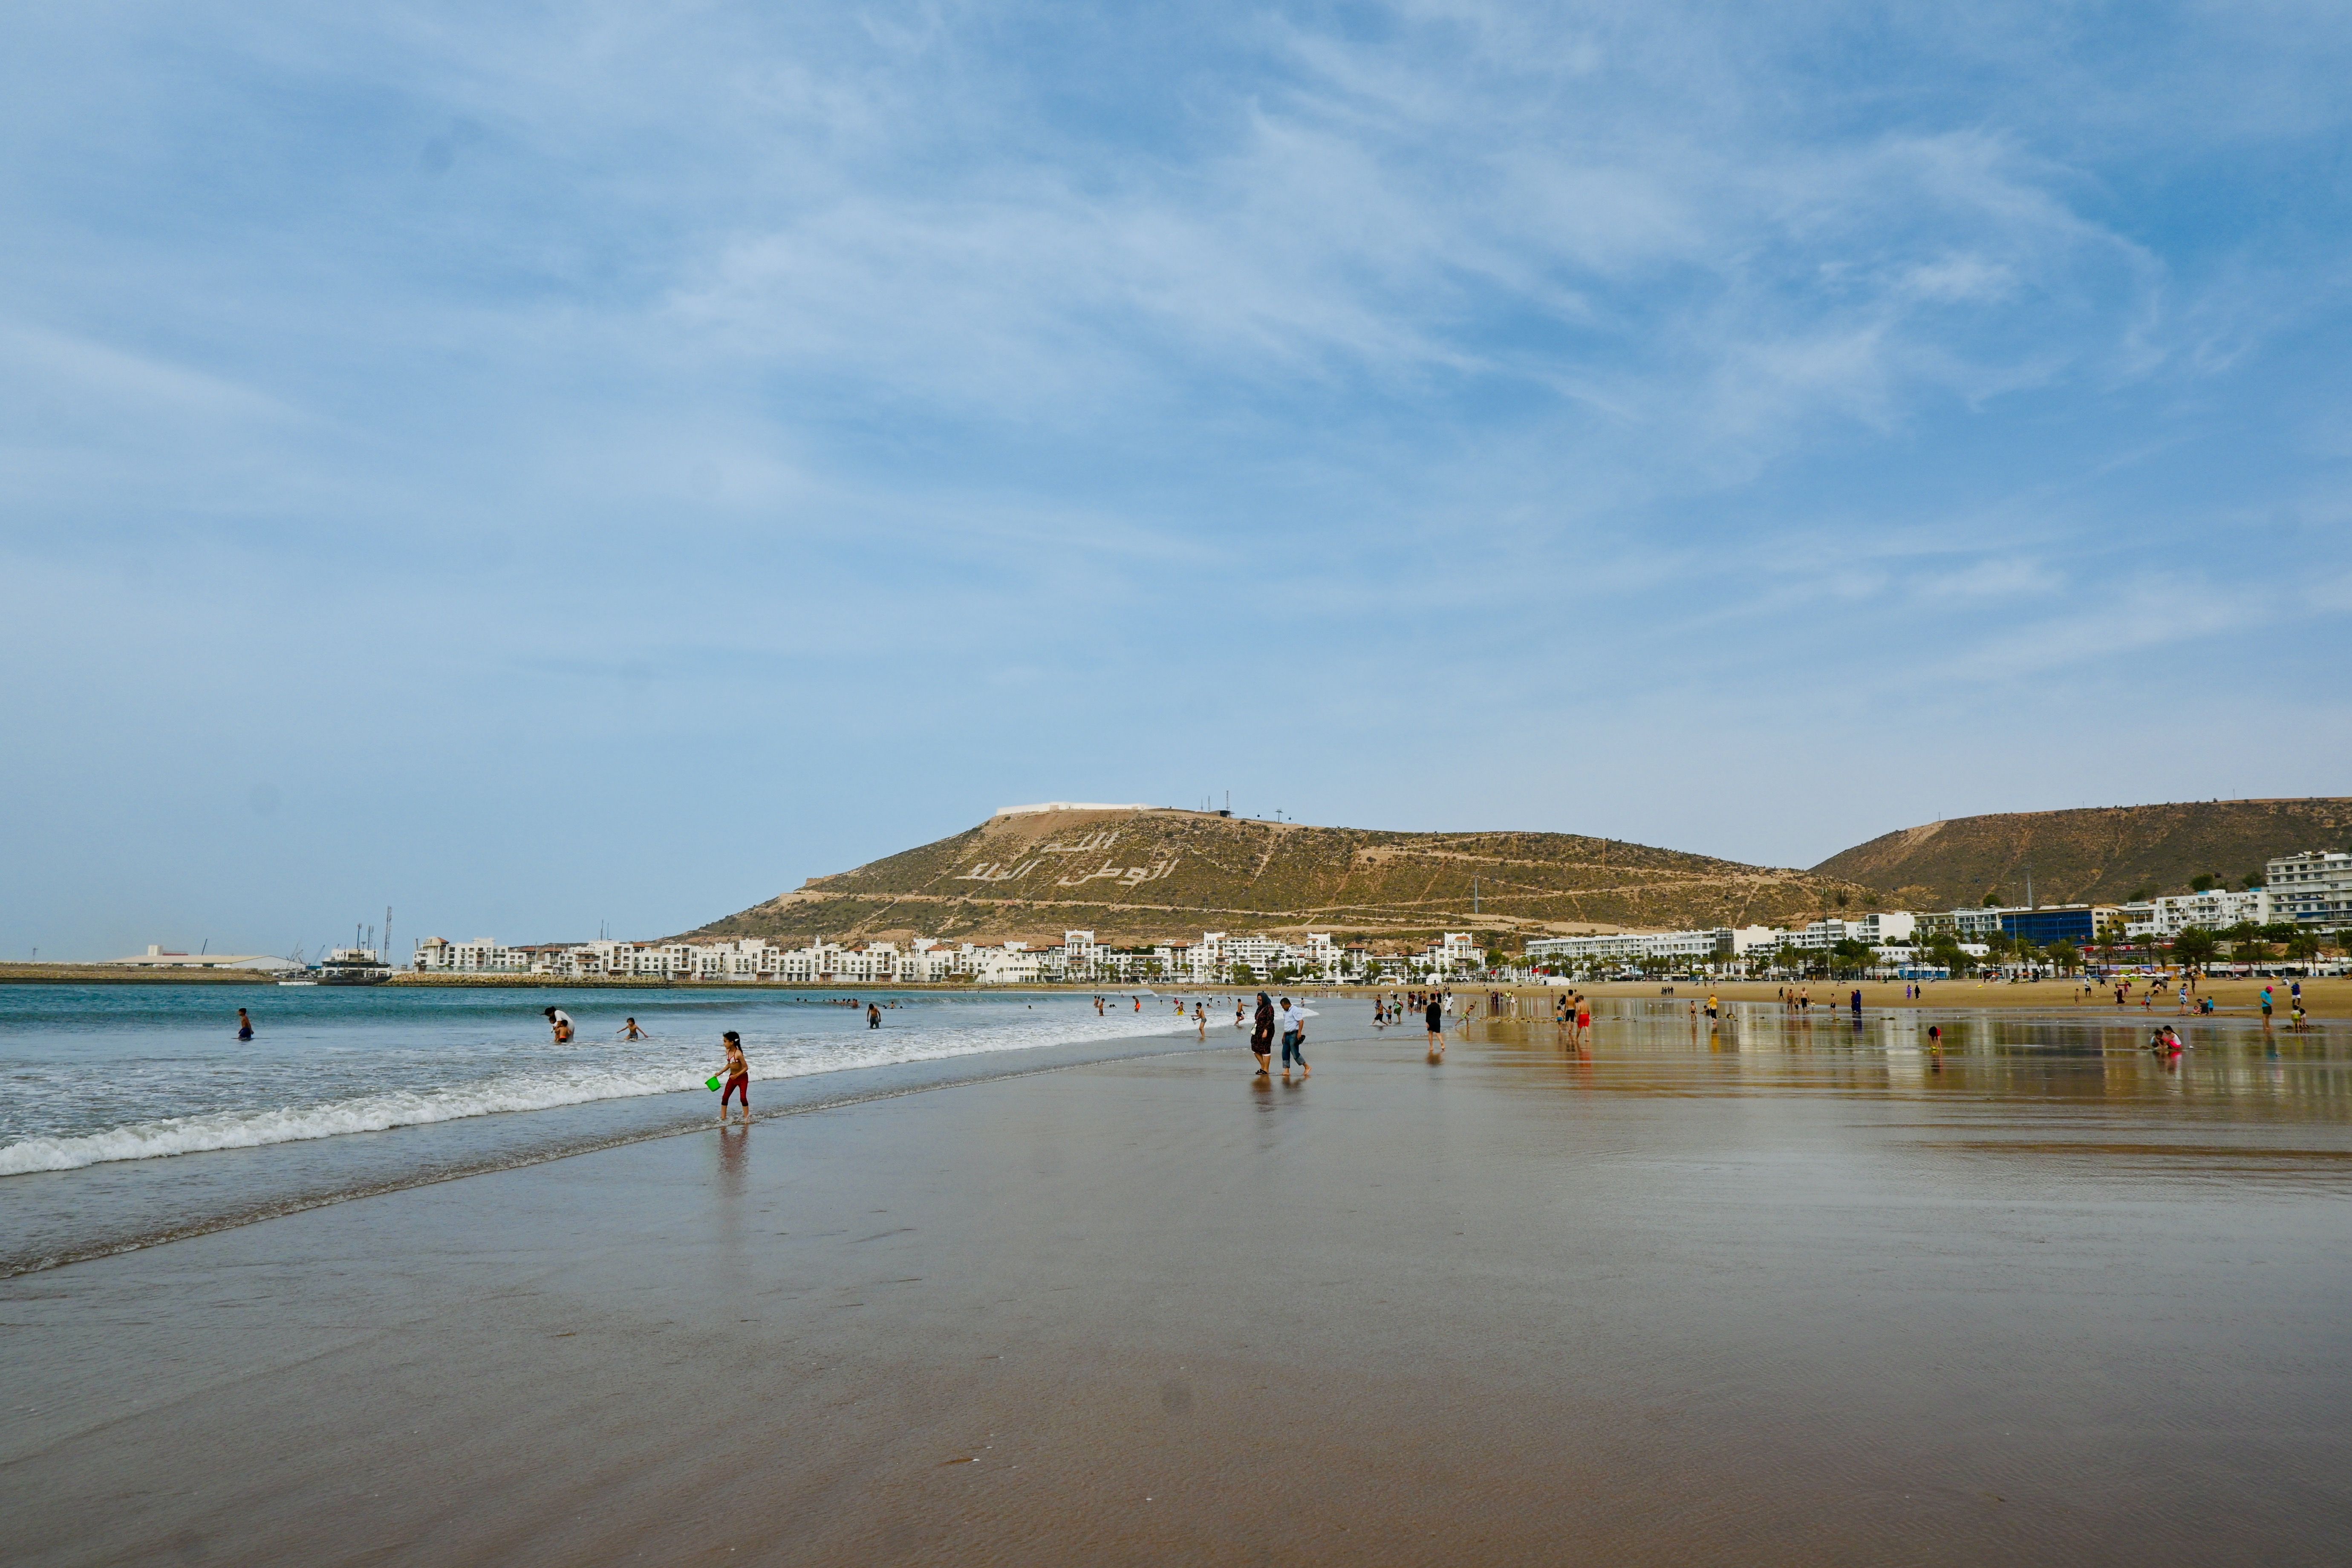 Marokko for family individuell - Erfahrungen mit Kindern in Marokko - Strand am Atlantik